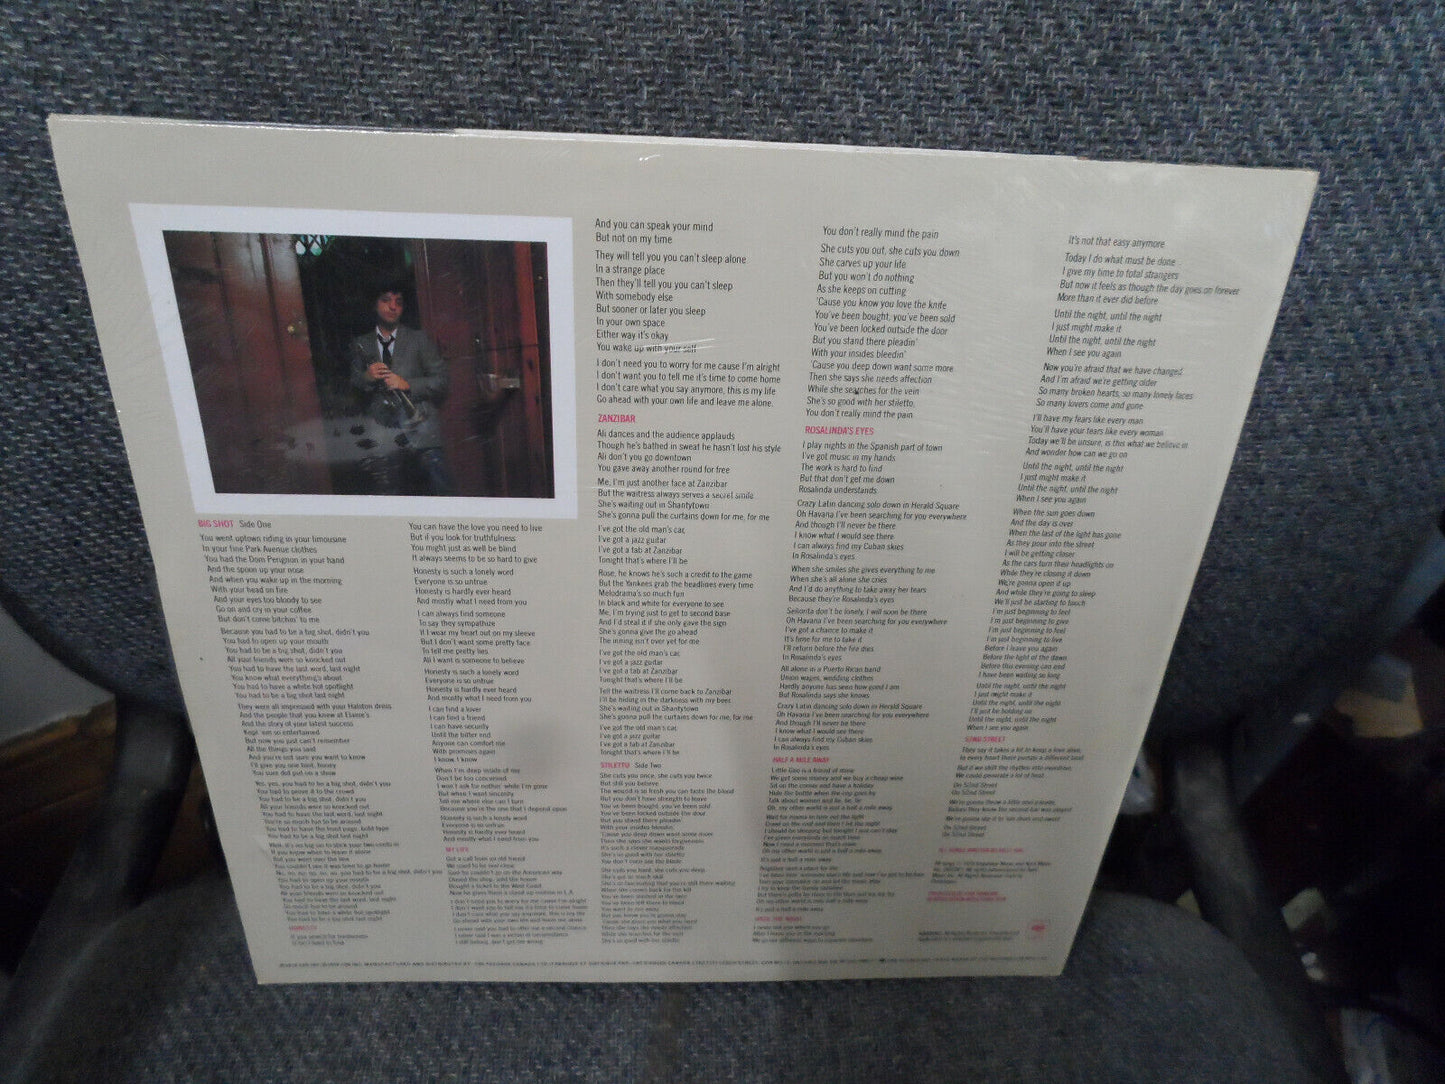 Billy Joel 52nd street sealed LP Record